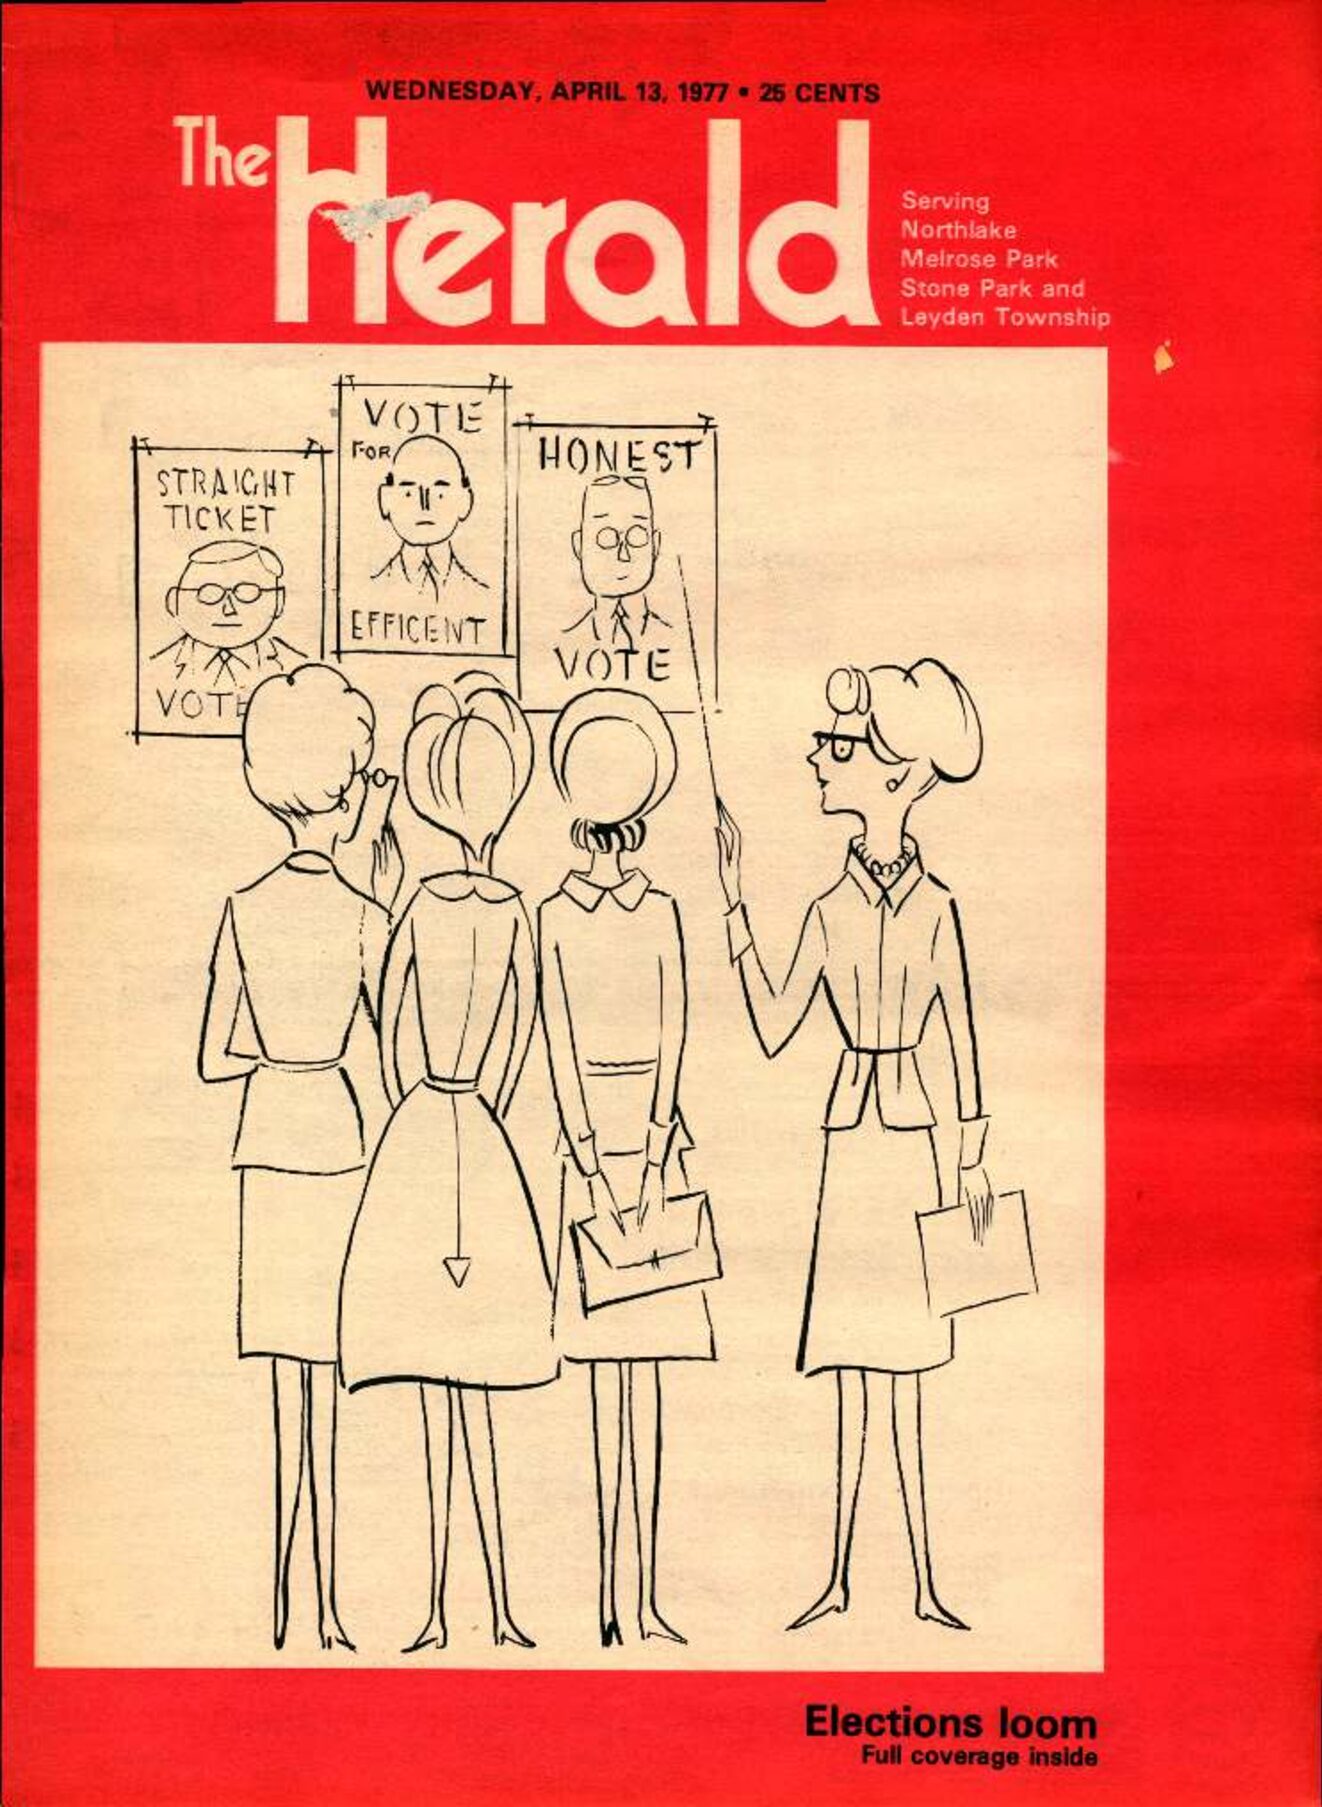 The Herald – 19770413